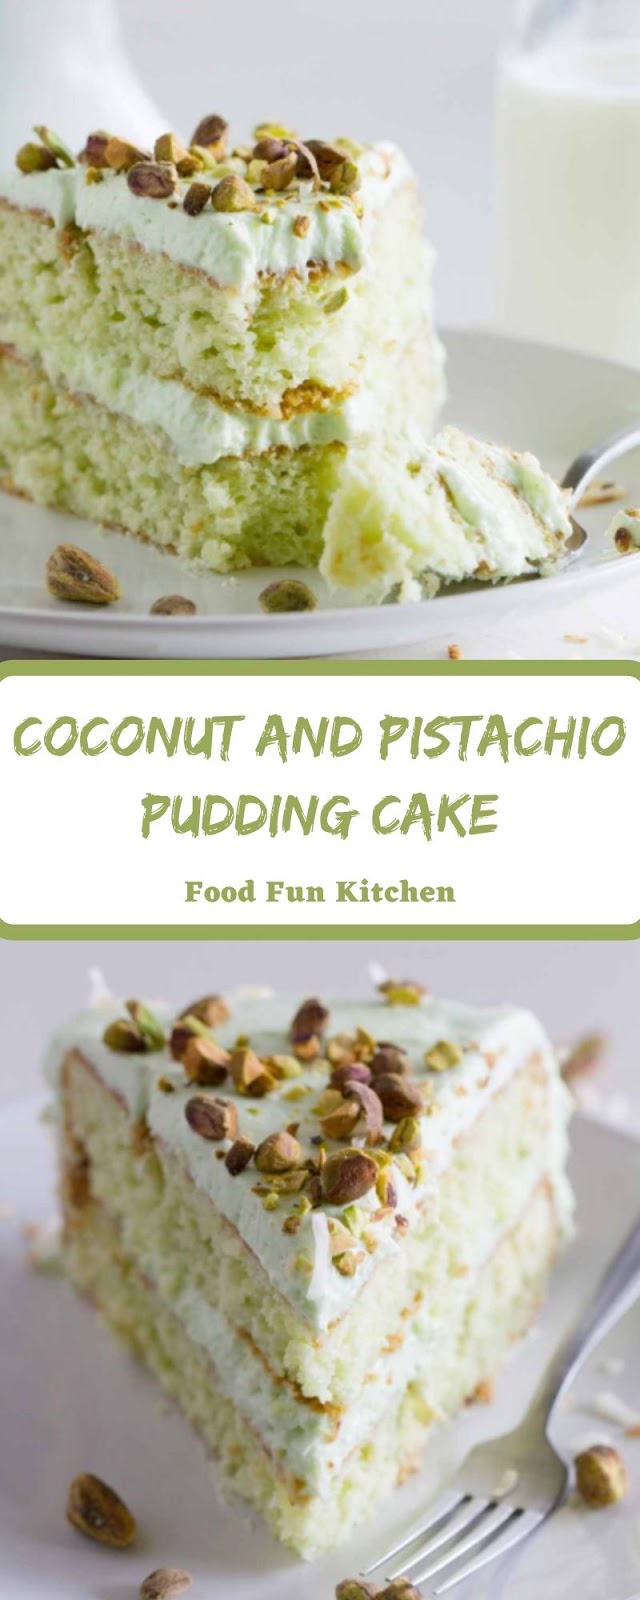 COCONUT AND PISTACHIO PUDDING CAKE